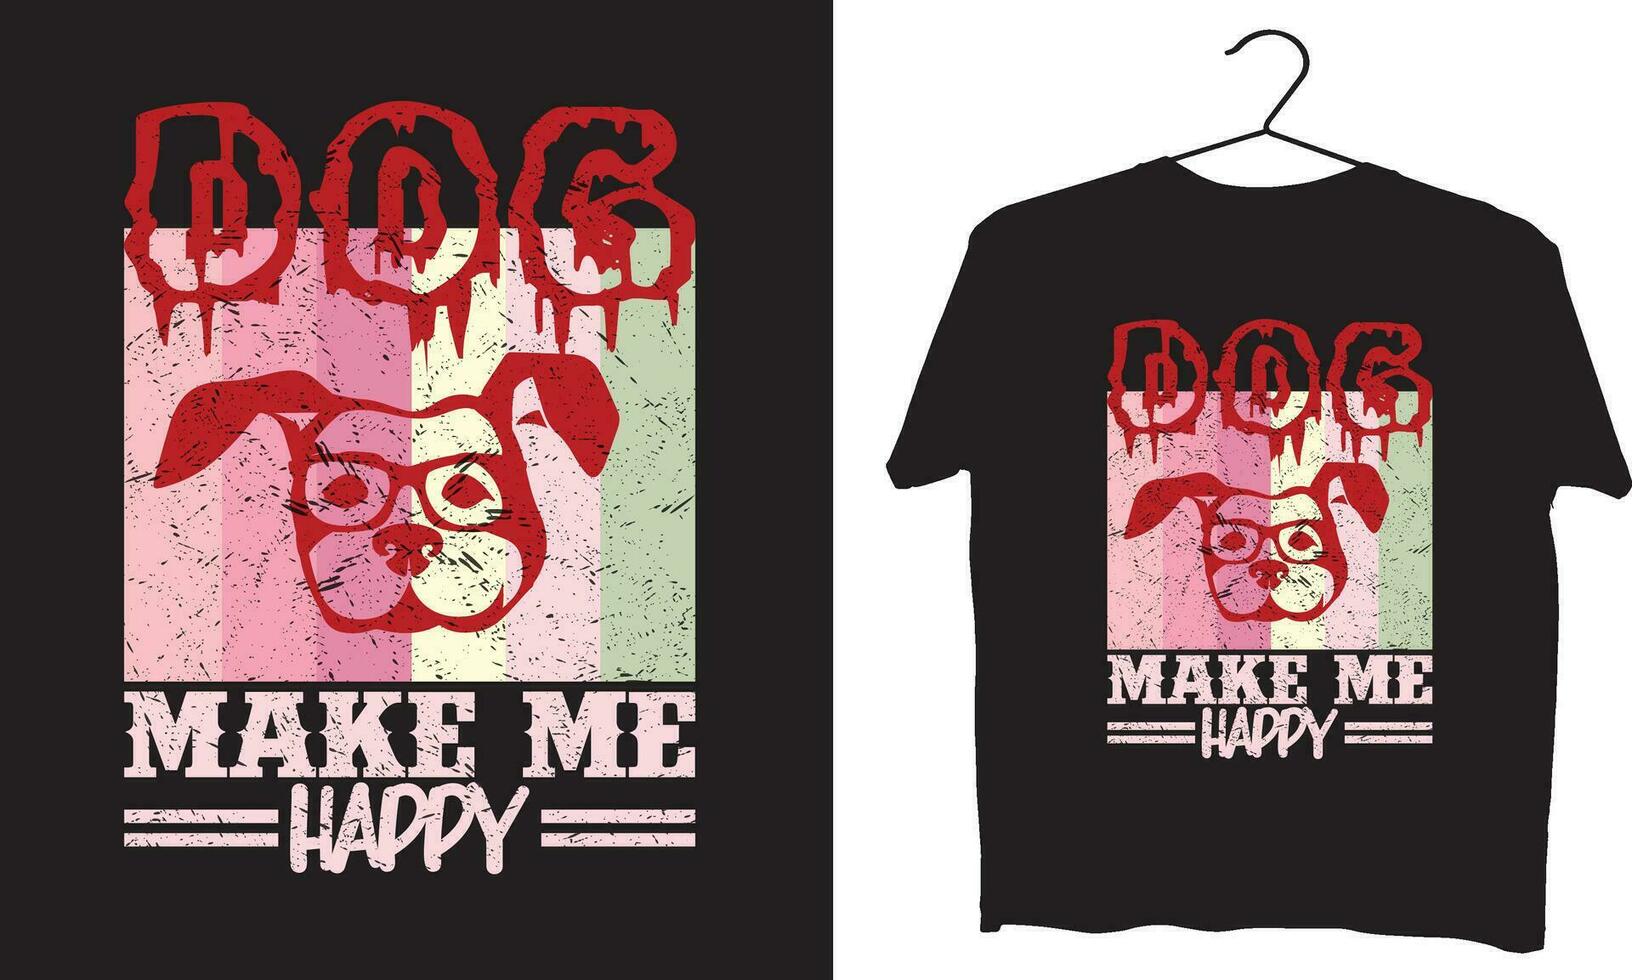 Dog t shirt design vector